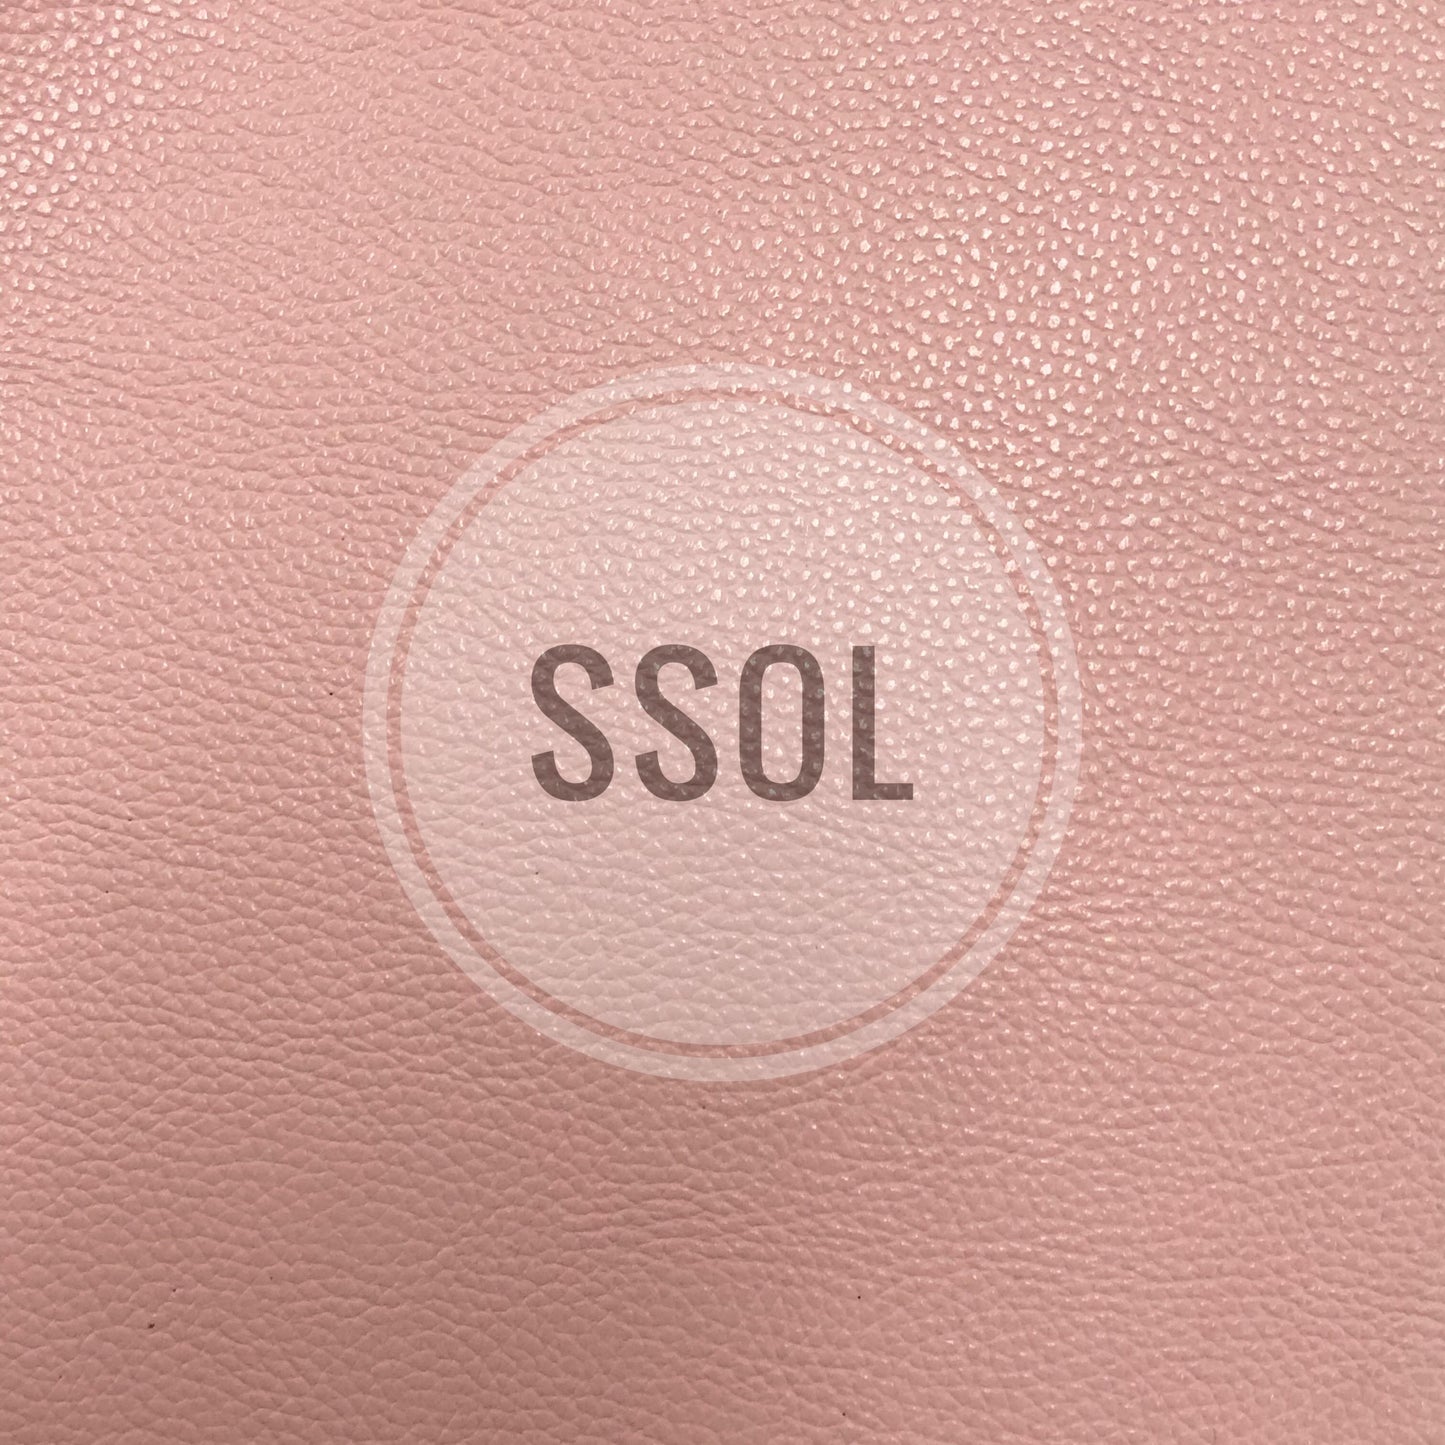 Vinyl/PU Leather - Plain Solids Textured 08 (Pale Pink)